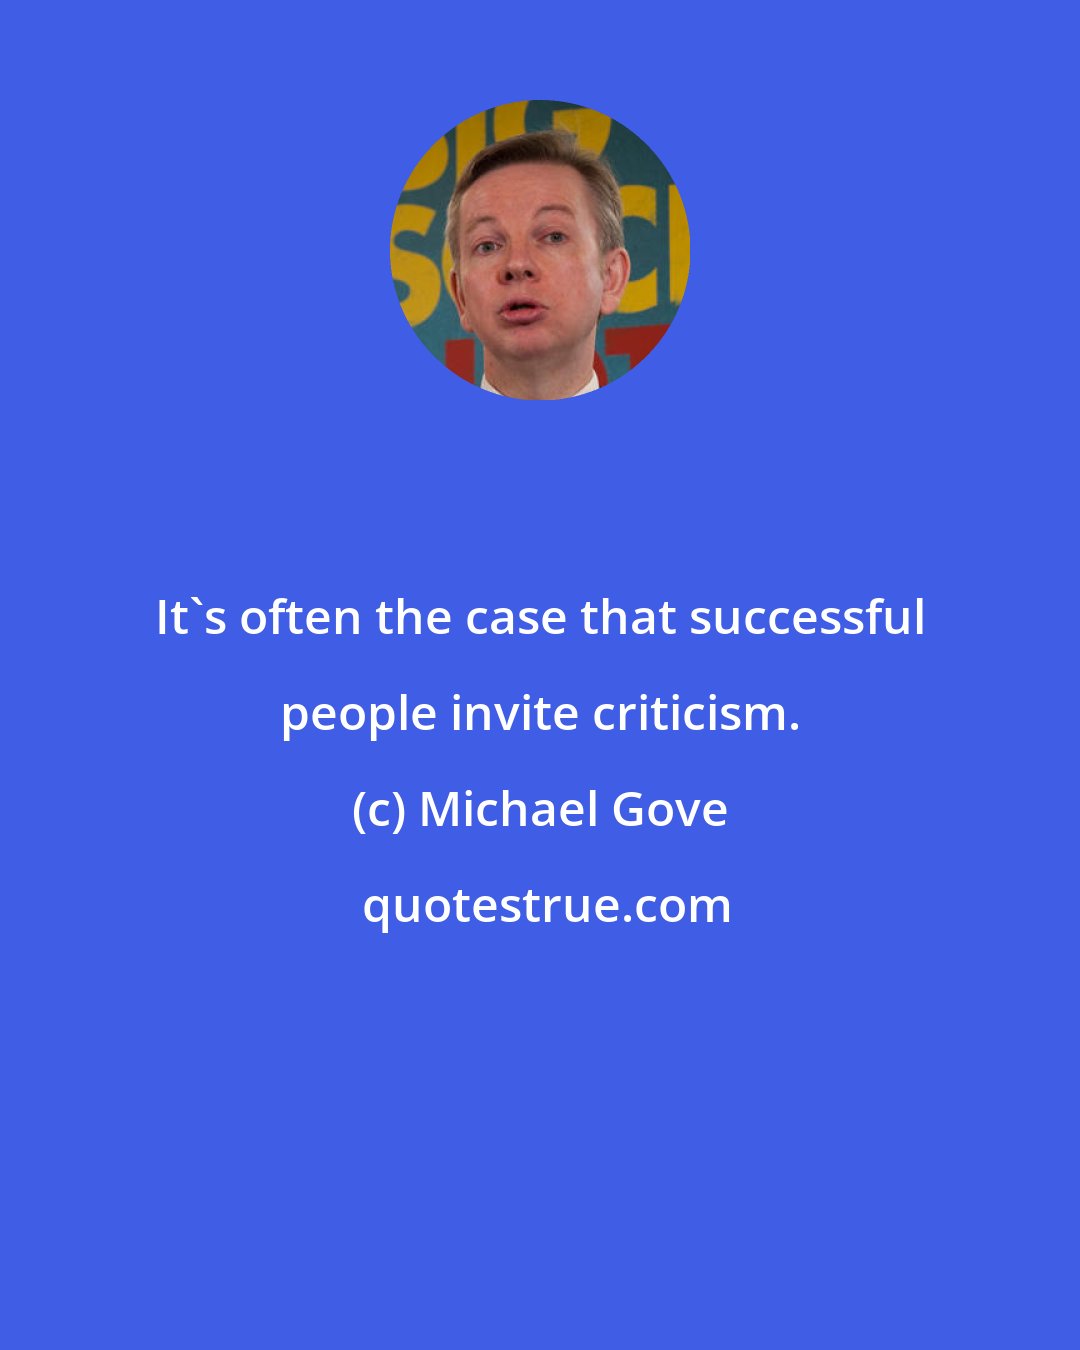 Michael Gove: It's often the case that successful people invite criticism.